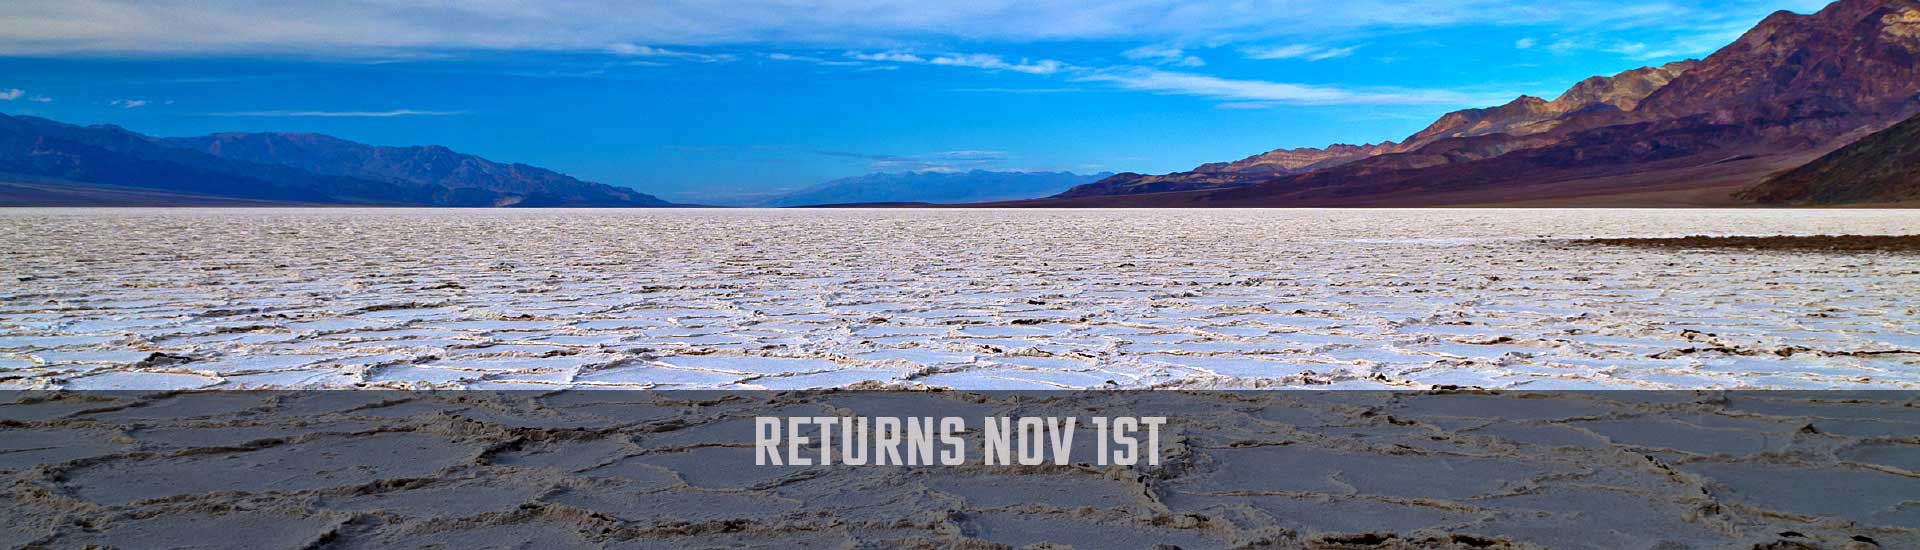 Death Valley National Park tour image of white salt flats with Returns Nov 1st banner.